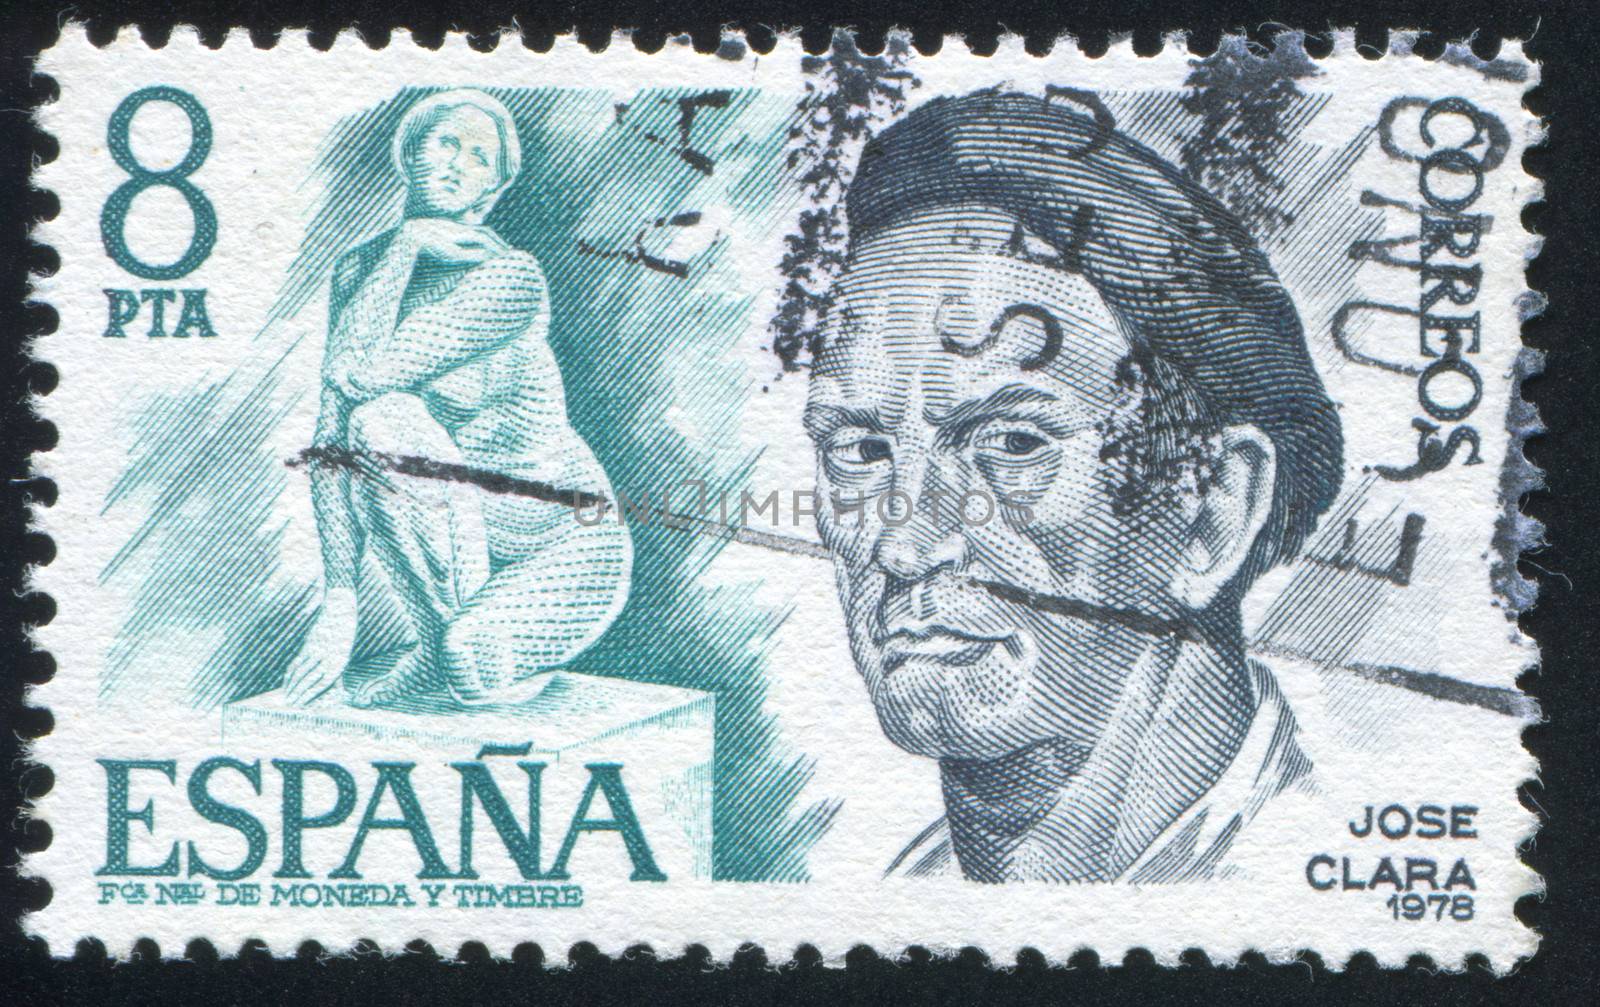 SPAIN - CIRCA 1978: stamp printed by Spain, shows Jose Clara, circa 1978